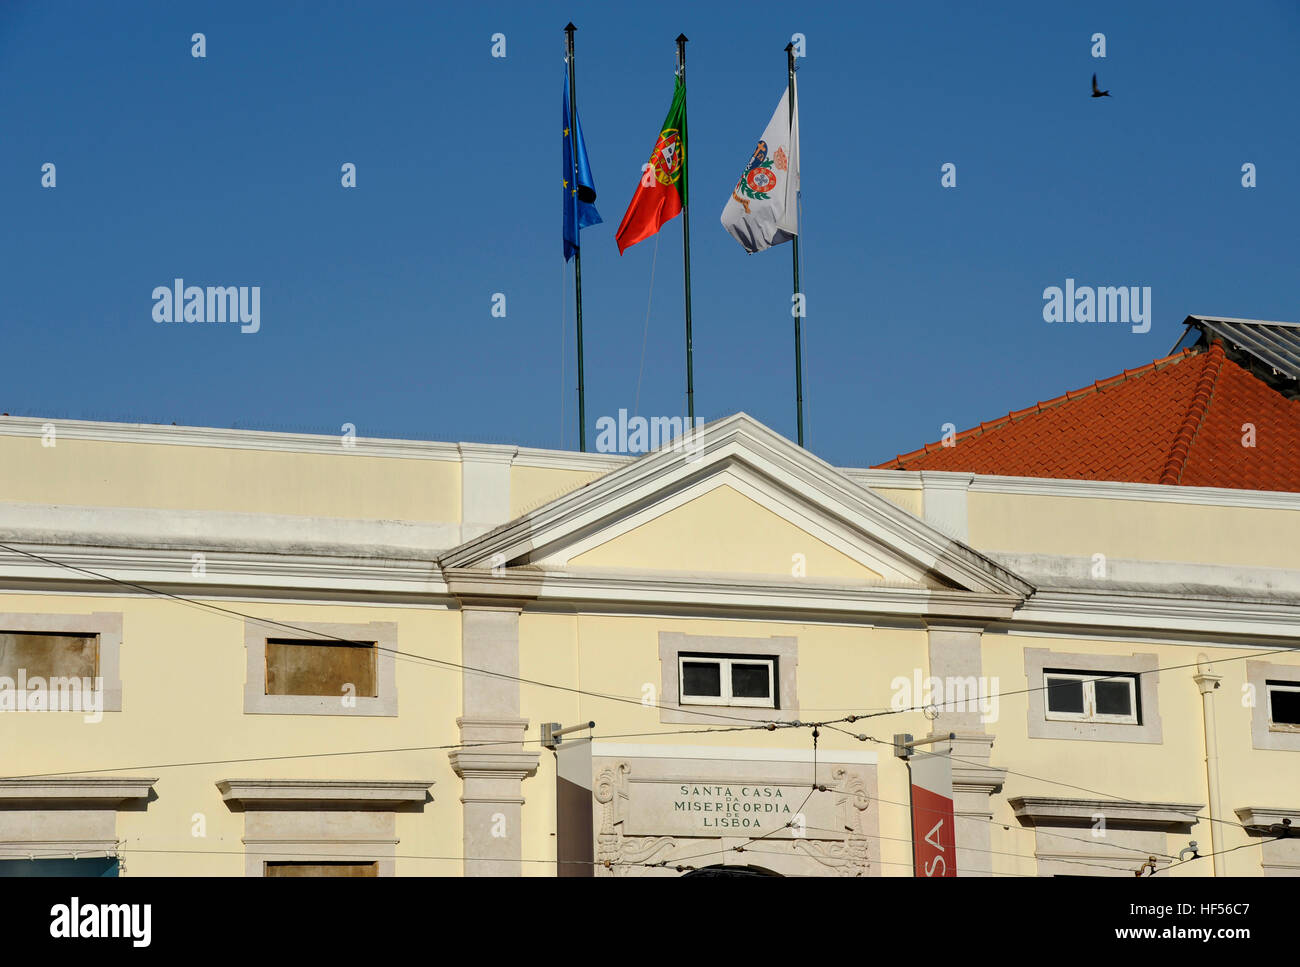 Jogos Santa Casa sign, Lisbon, Portugal Stock Photo - Alamy